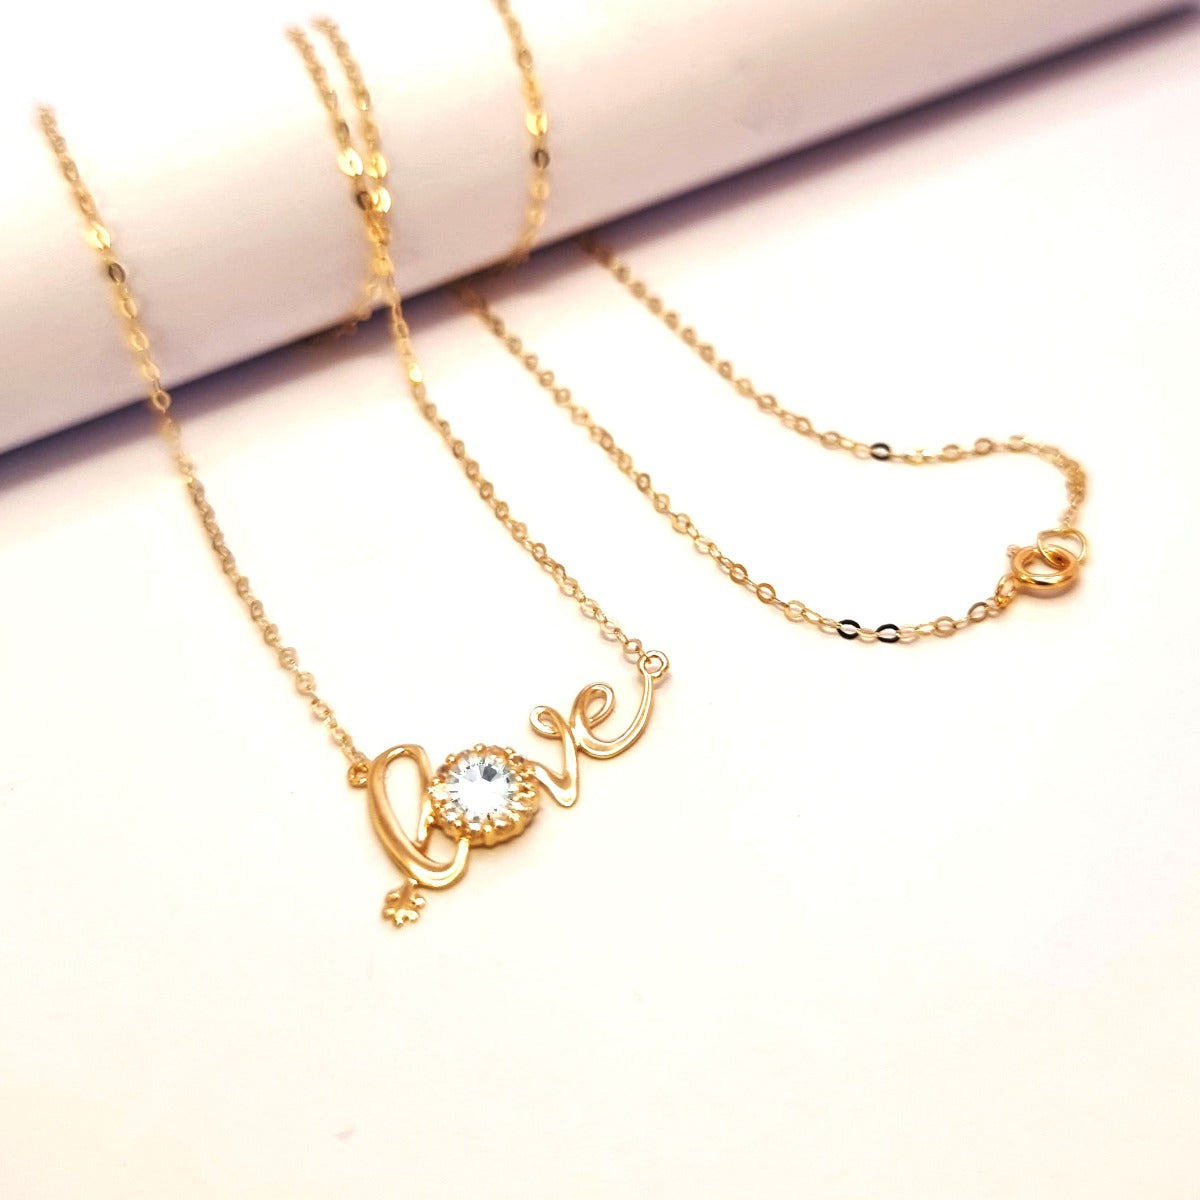 18K Pure Gold Love w/ Zircon stone Necklace